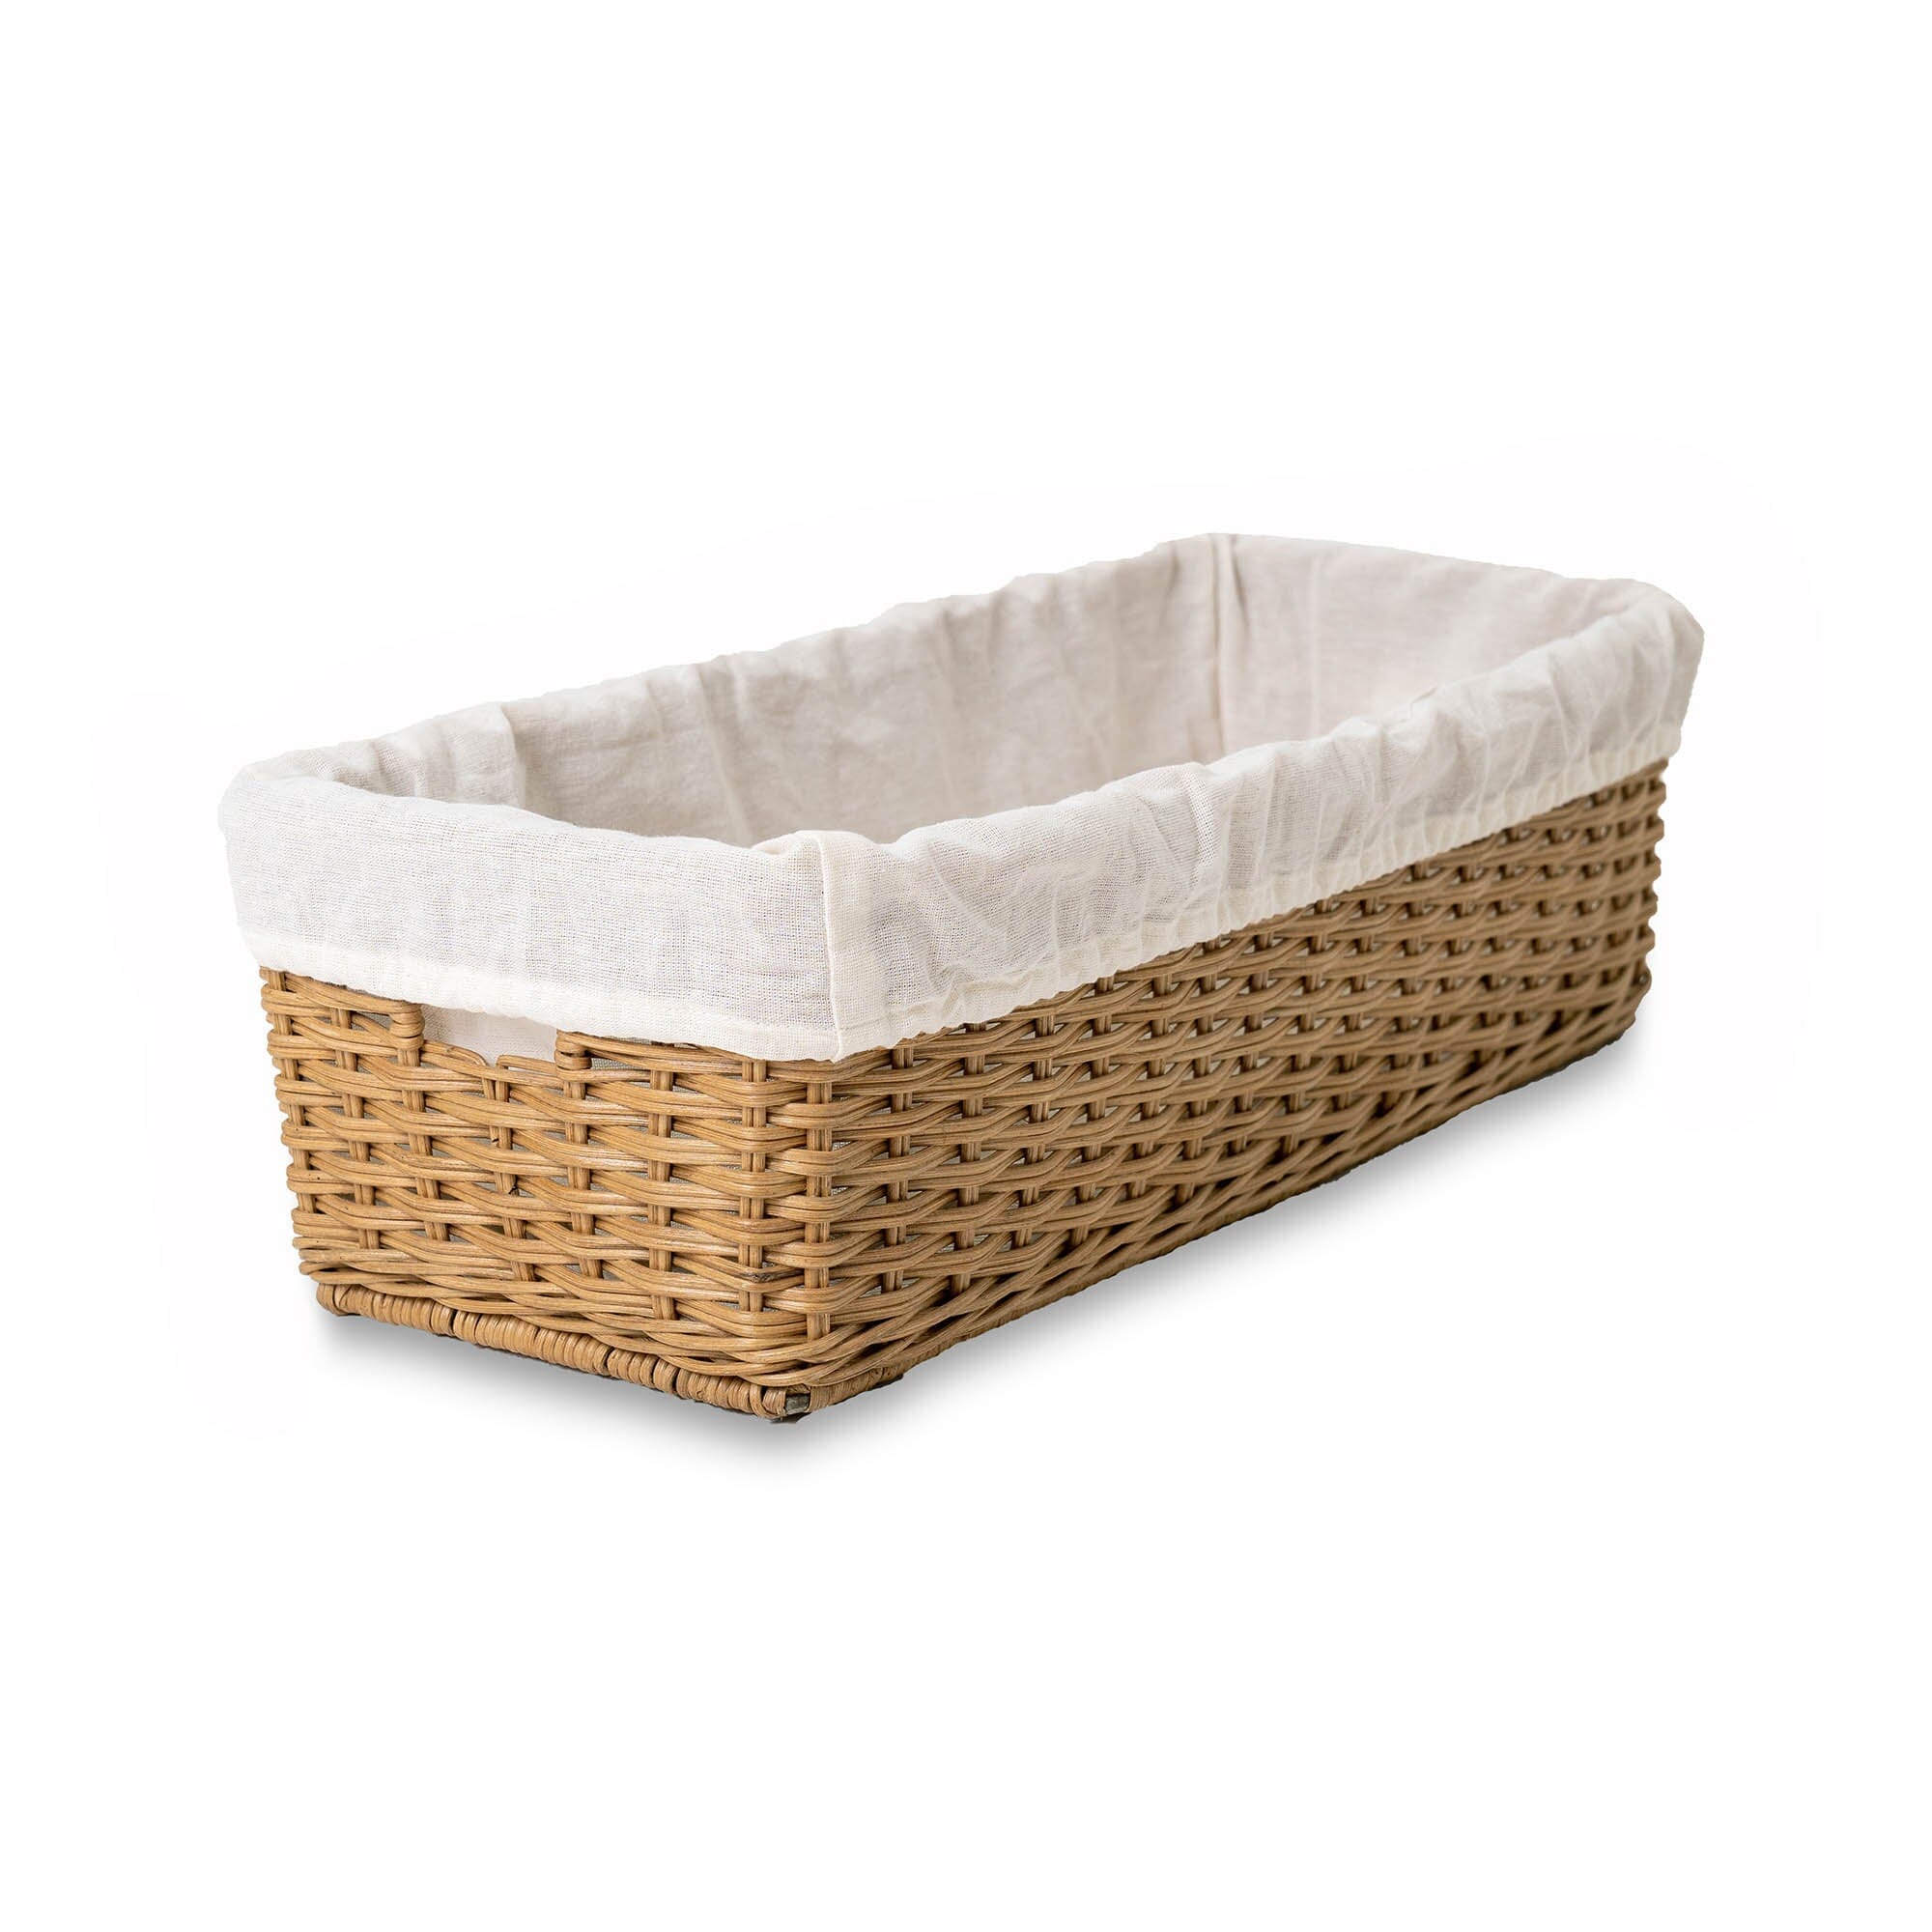 Narrow Rectangular Wicker Storage Basket - Antique Walnut Brown - Small / No Liner